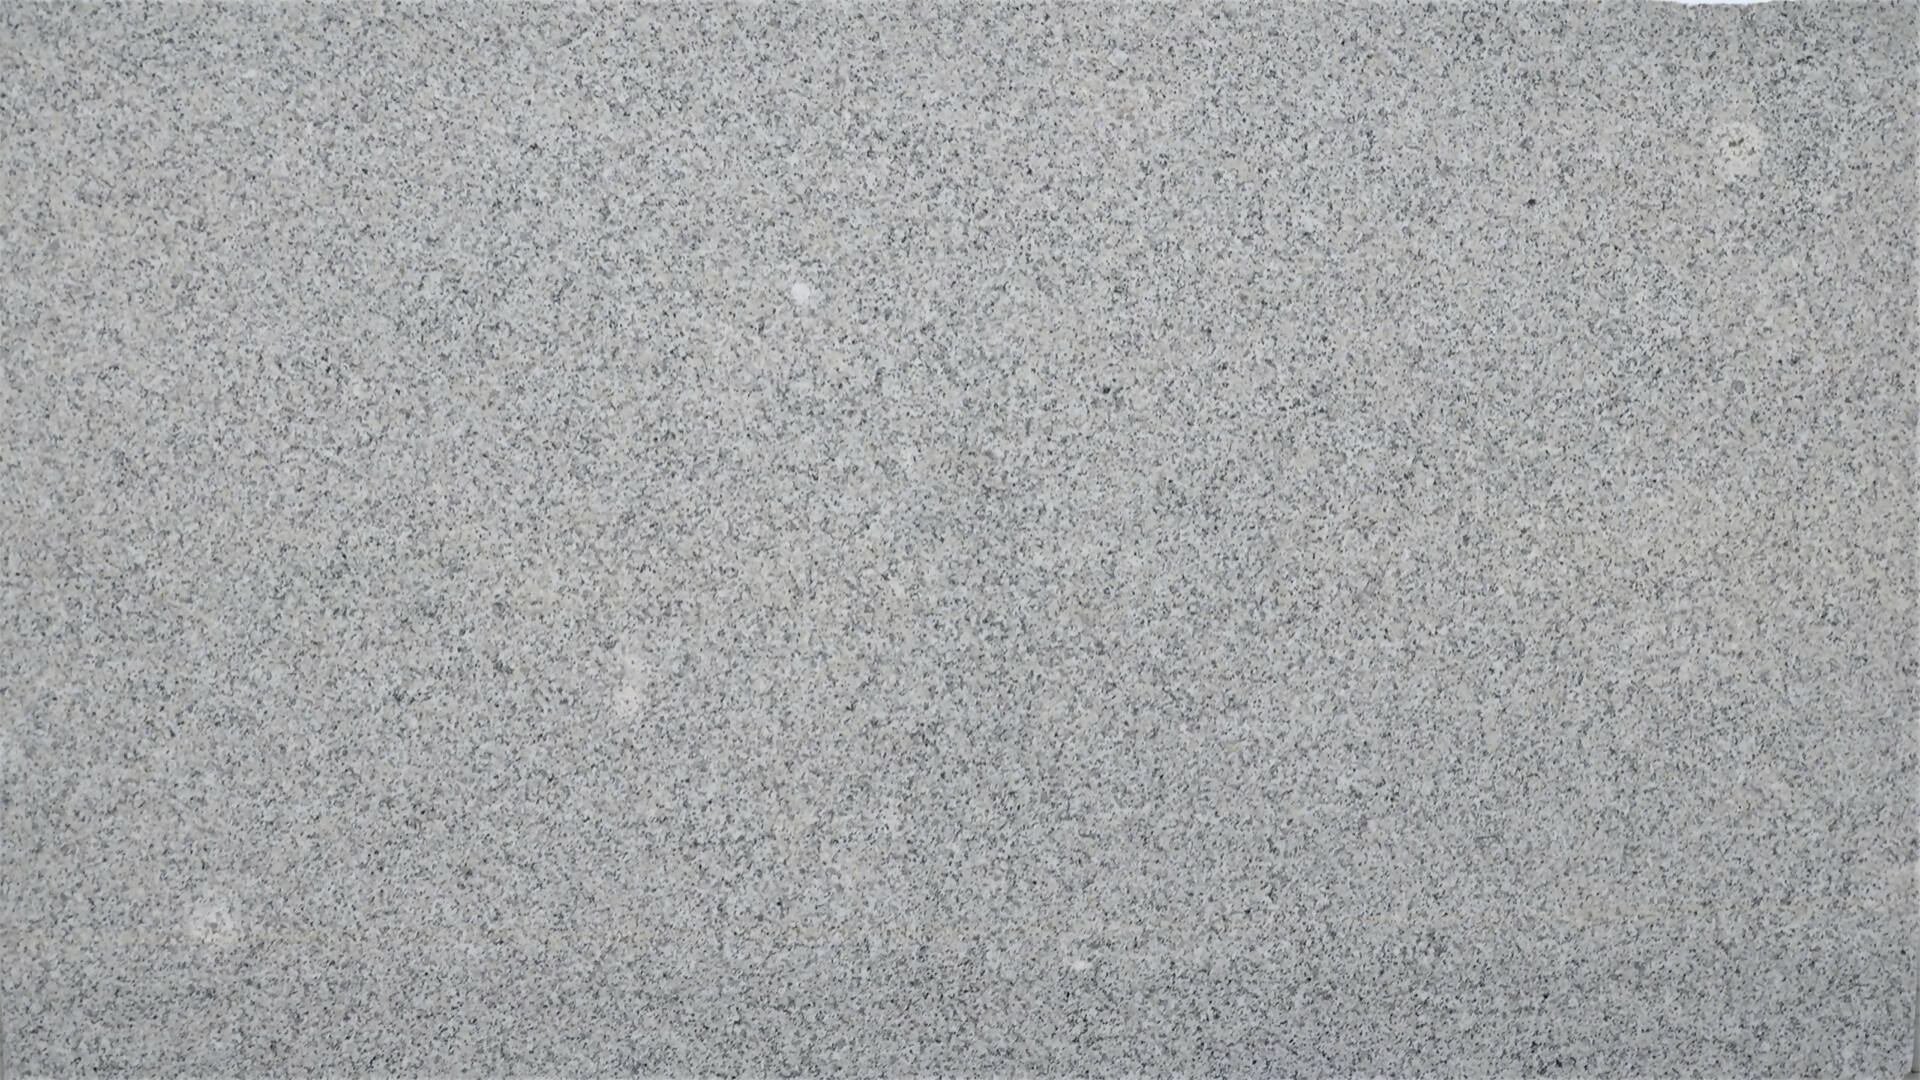 SARDO GREY GRANITE,Granite,Worldwide Stone Ltd,www.work-tops.com